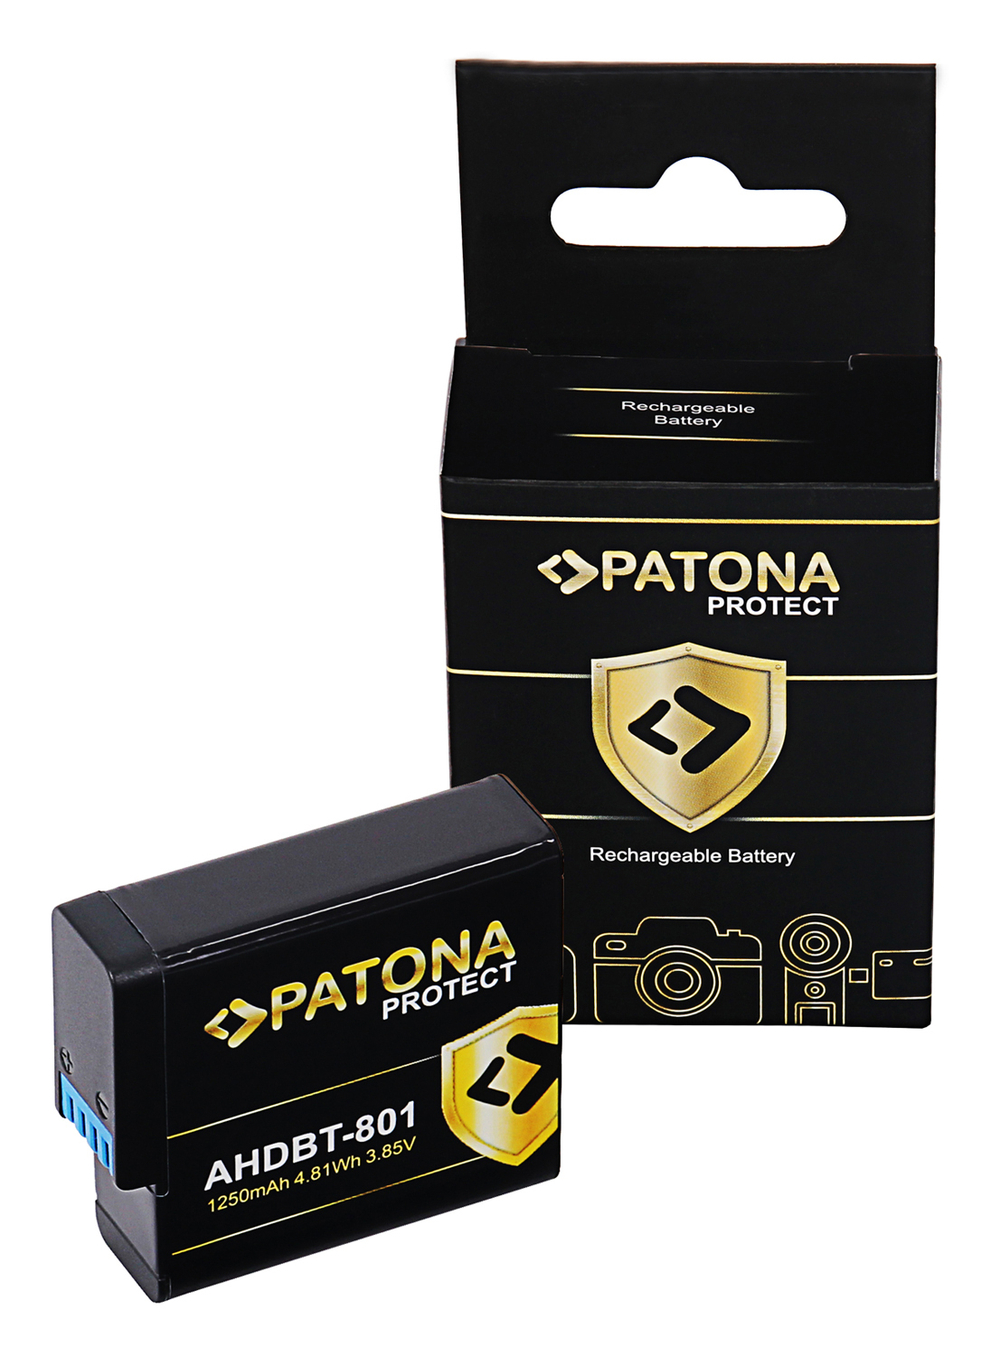 PATONA Protect аналог GoPro AHDBT-801/701/501